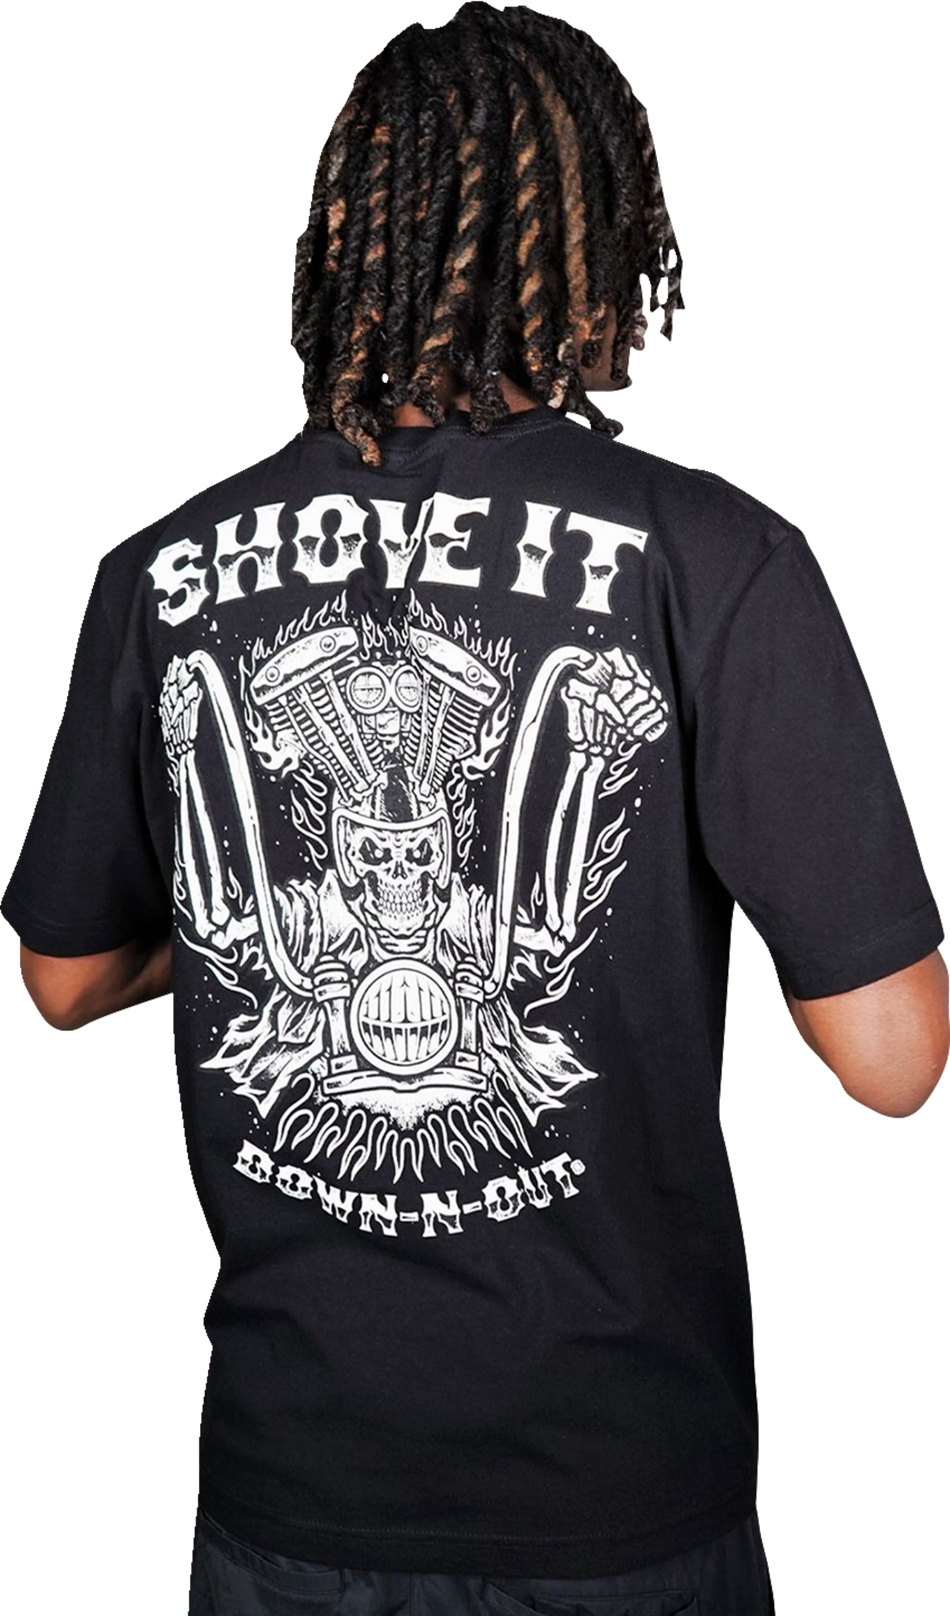 LETHAL THREAT Down-N-Out Shove It T-Shirt - Black - XL DT10046XL